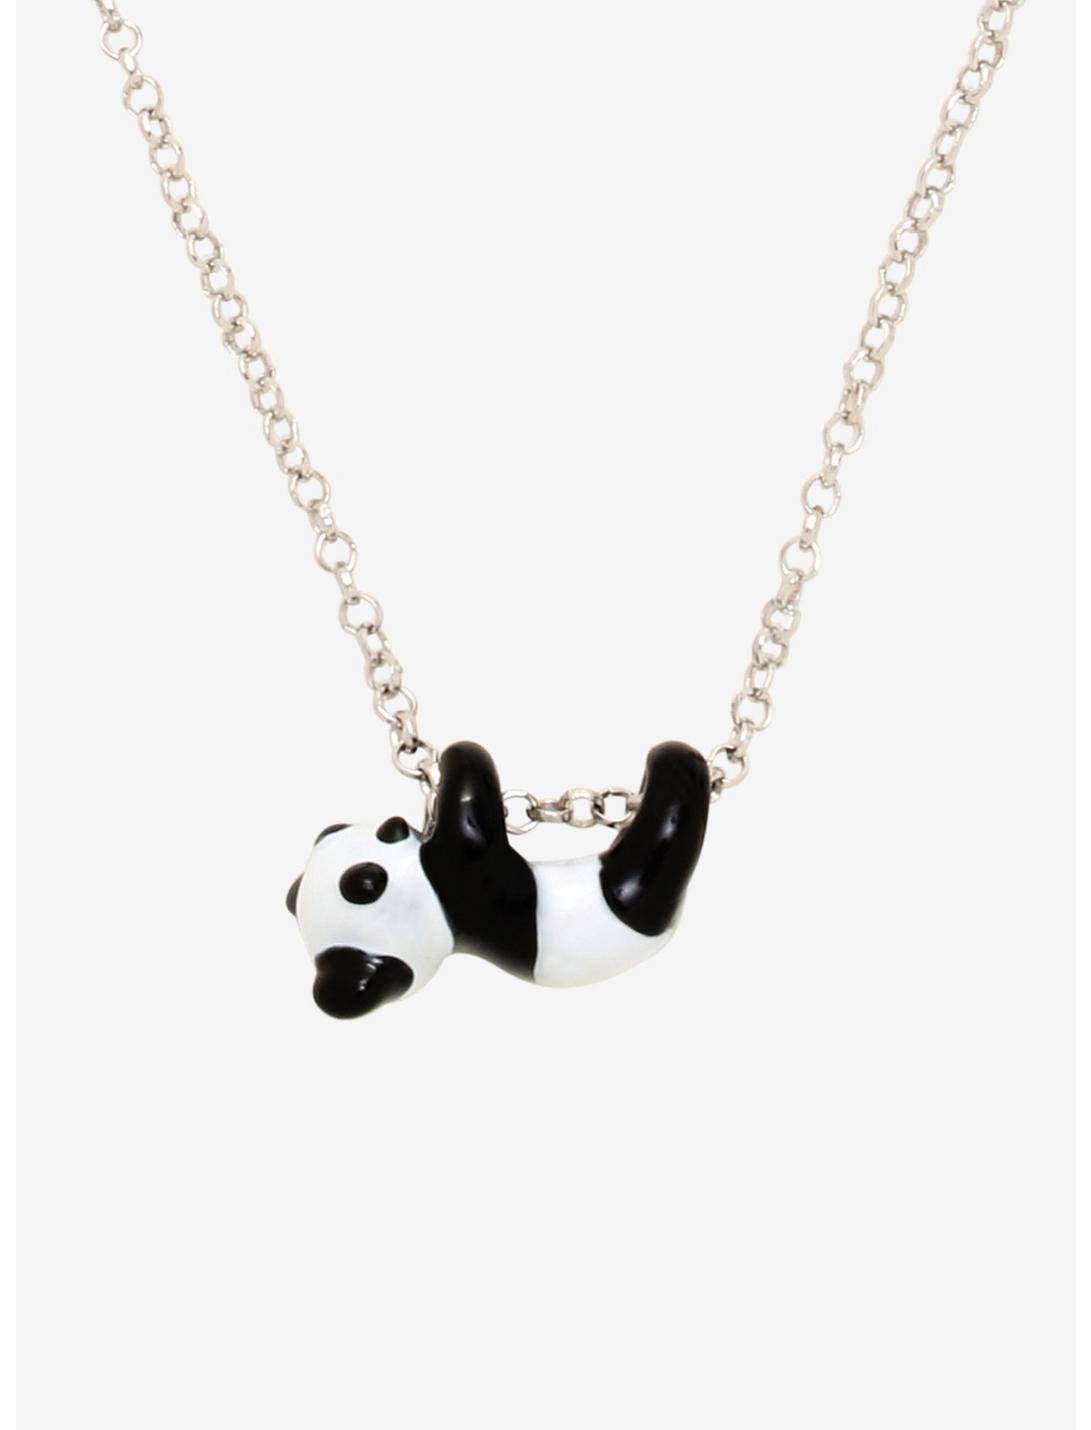 New silver tone panda necklace 182